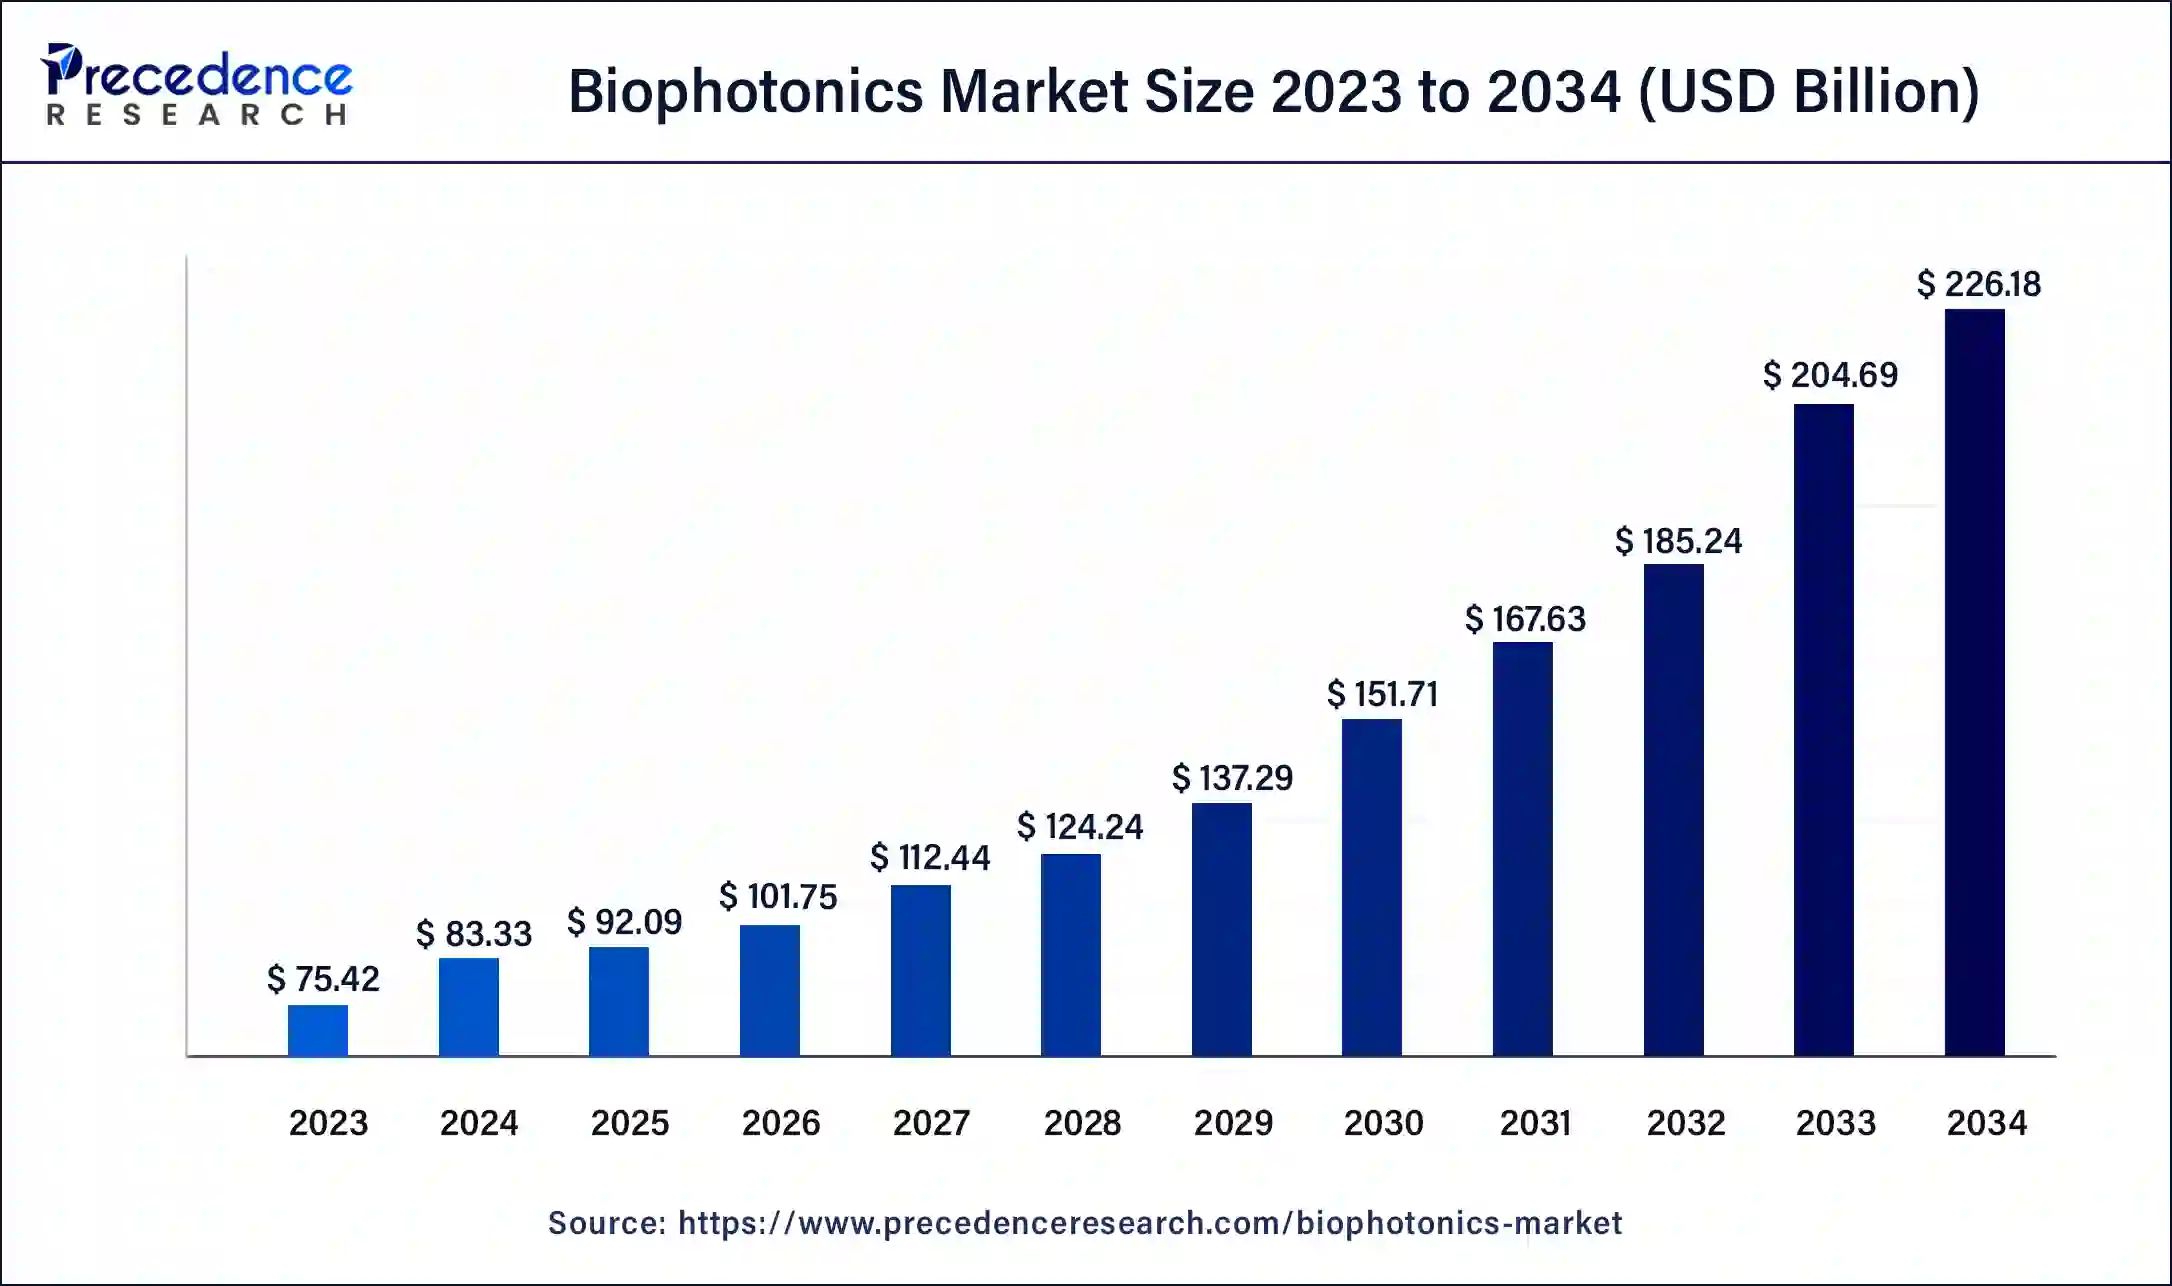 Biophotonics Market Size 2024 to 2034